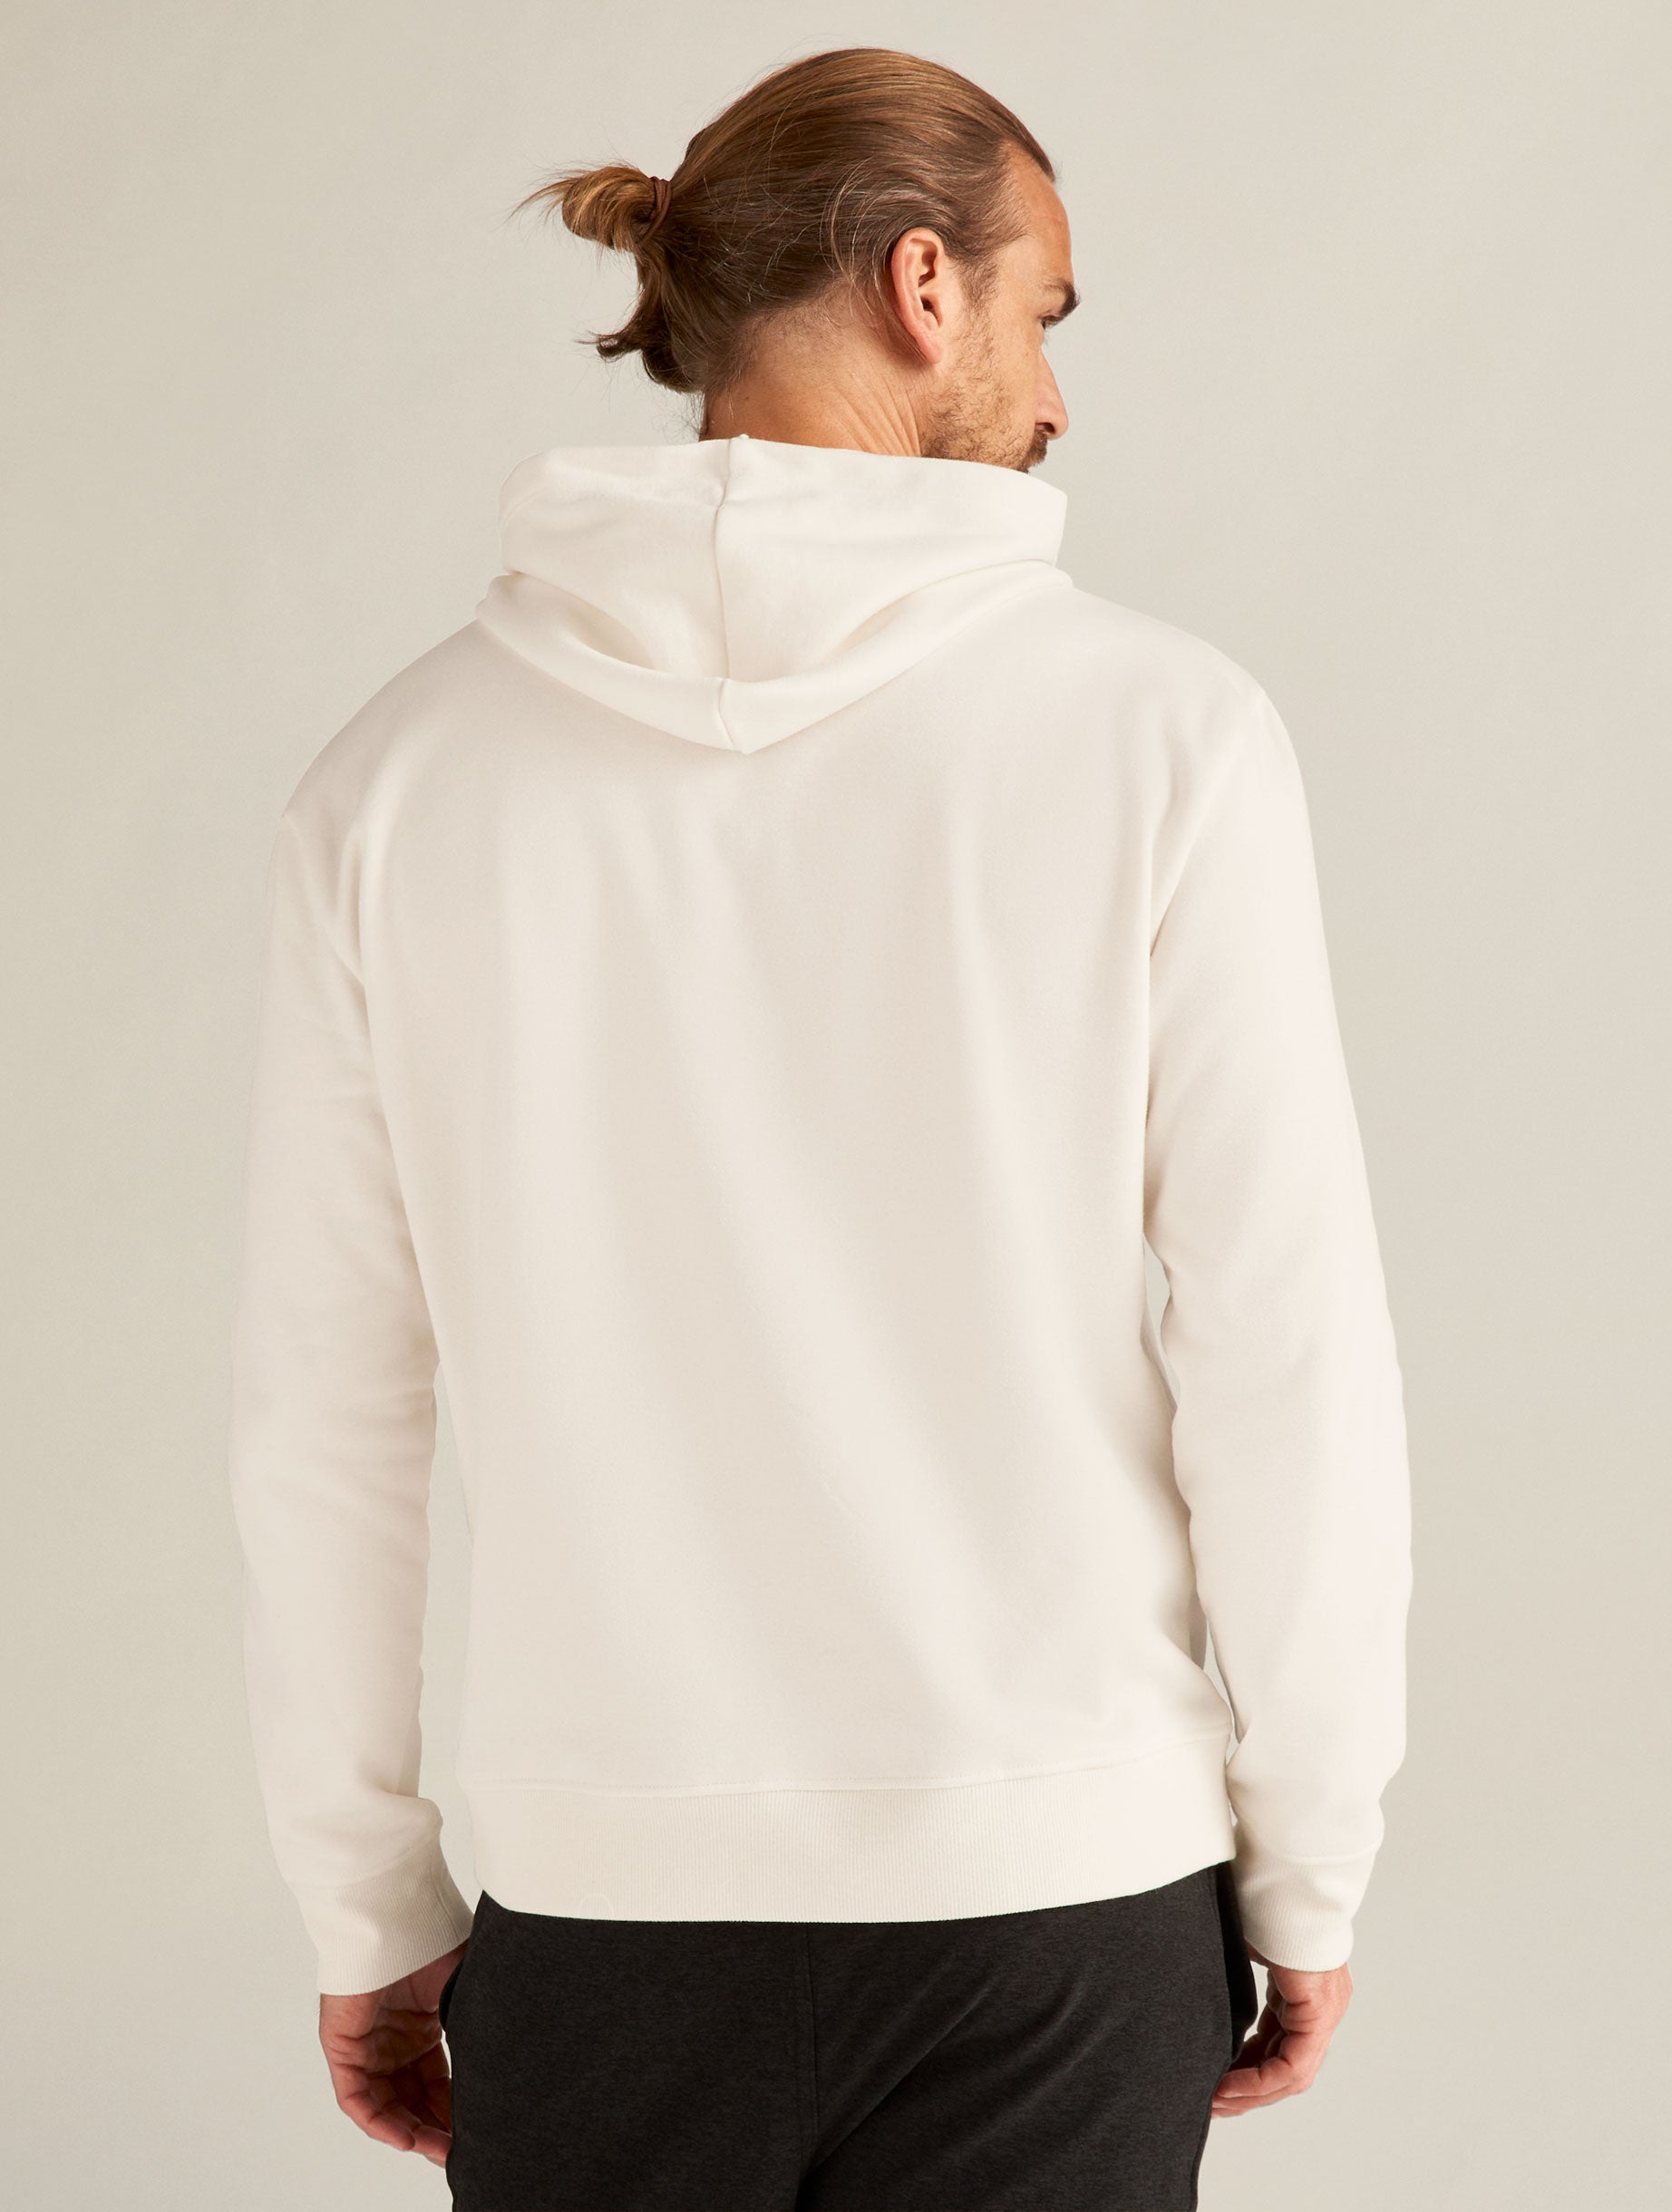 white unisex hoodie.